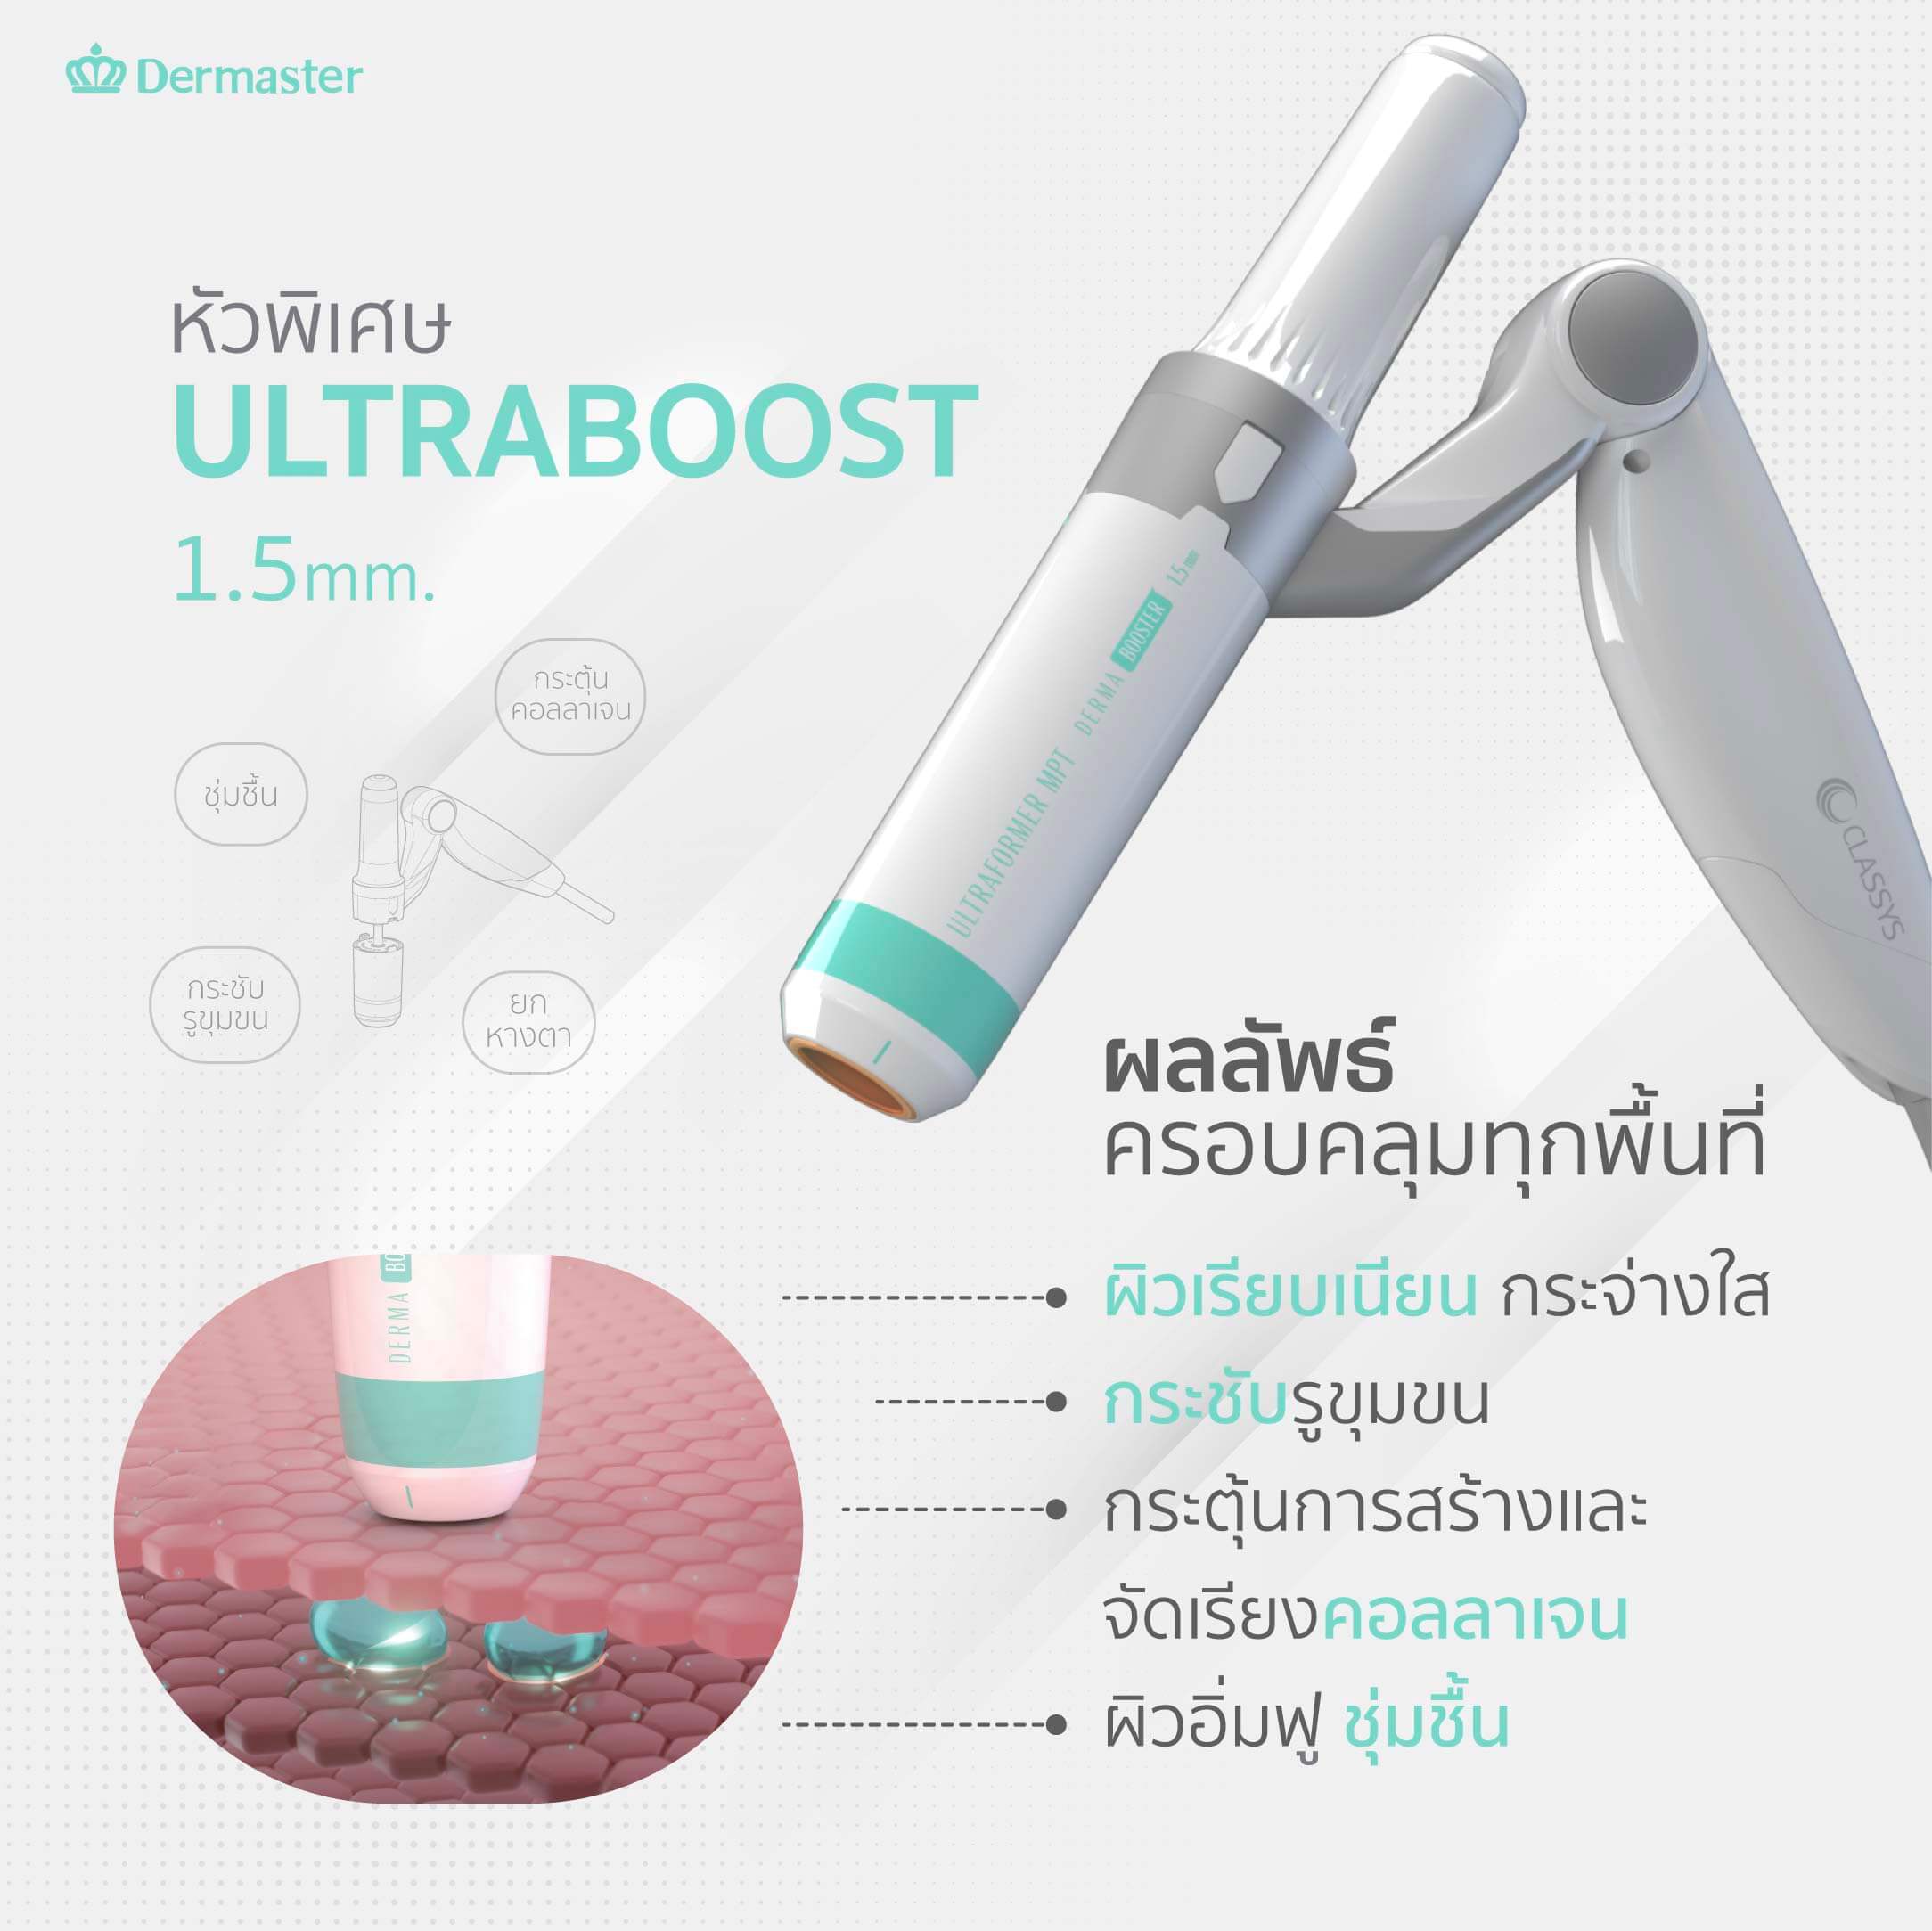 Dermaster Thailand เทคโนโลยีใหม่ล่าสุด Ultraformer MPT เฉพาะสาขาเอกมัยเท่านั้น 3